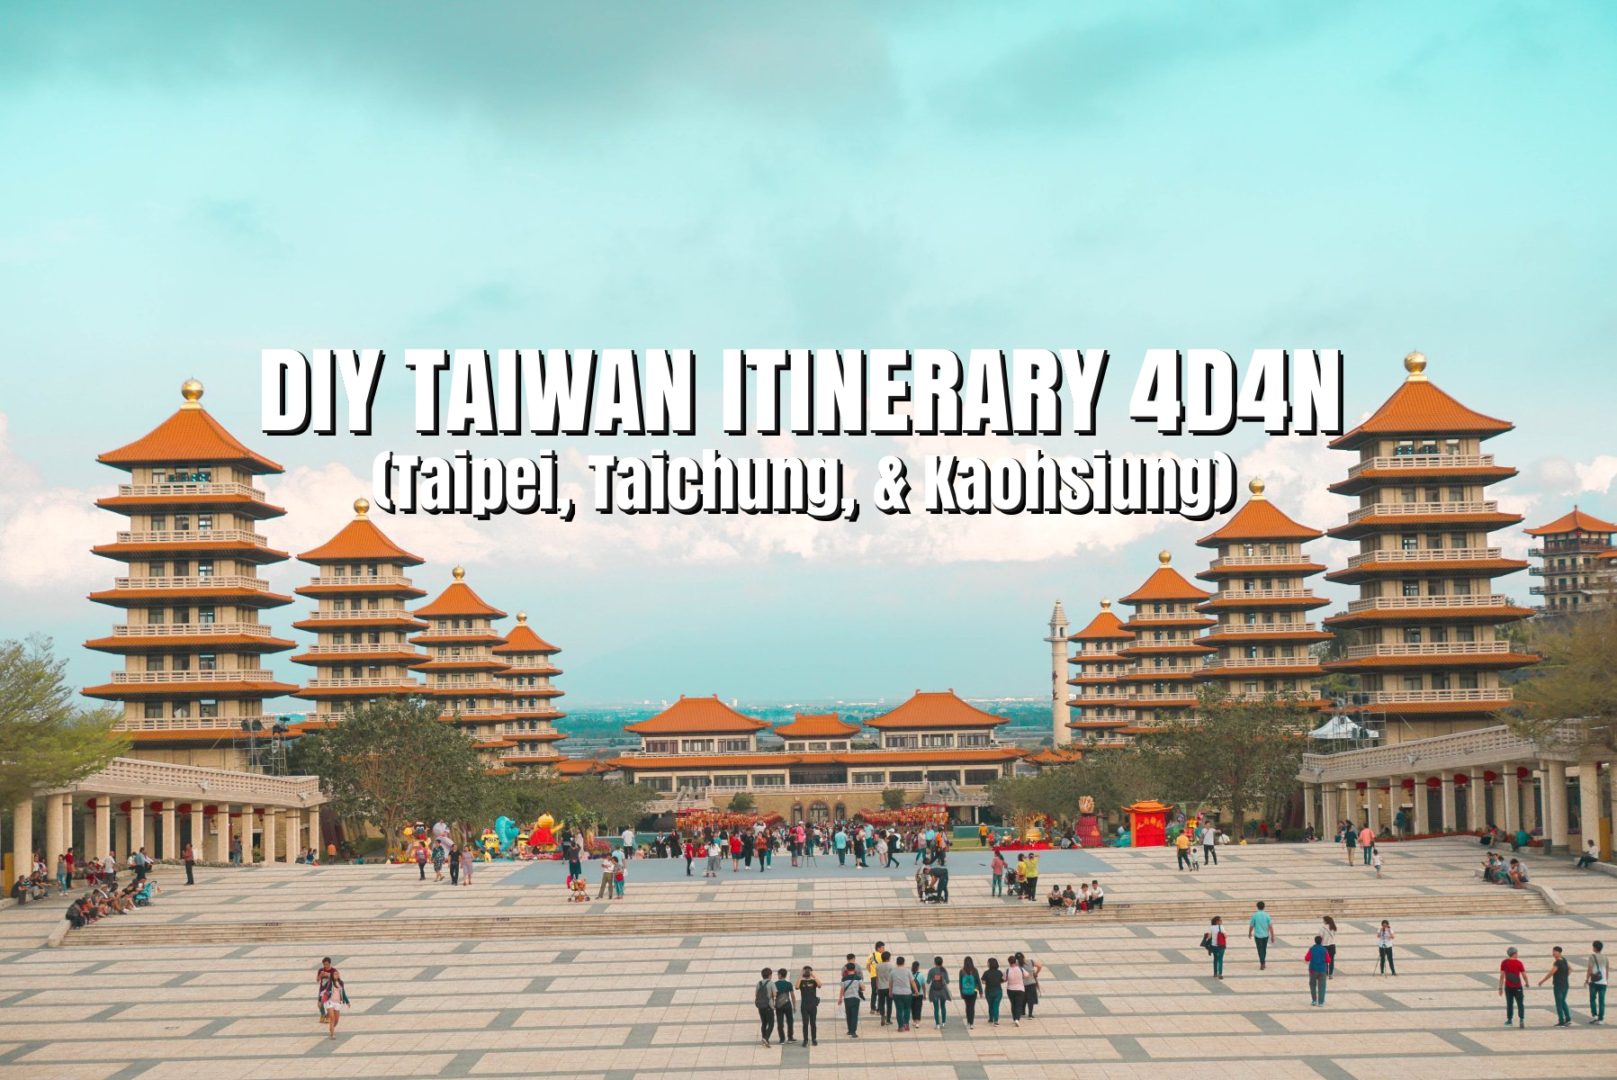 TAIWAN ITINERARY 4D4N (Taipei, Taichung, & Kaohsiung) | DIY Taiwan Travel Guide 2018 + Travel Tips